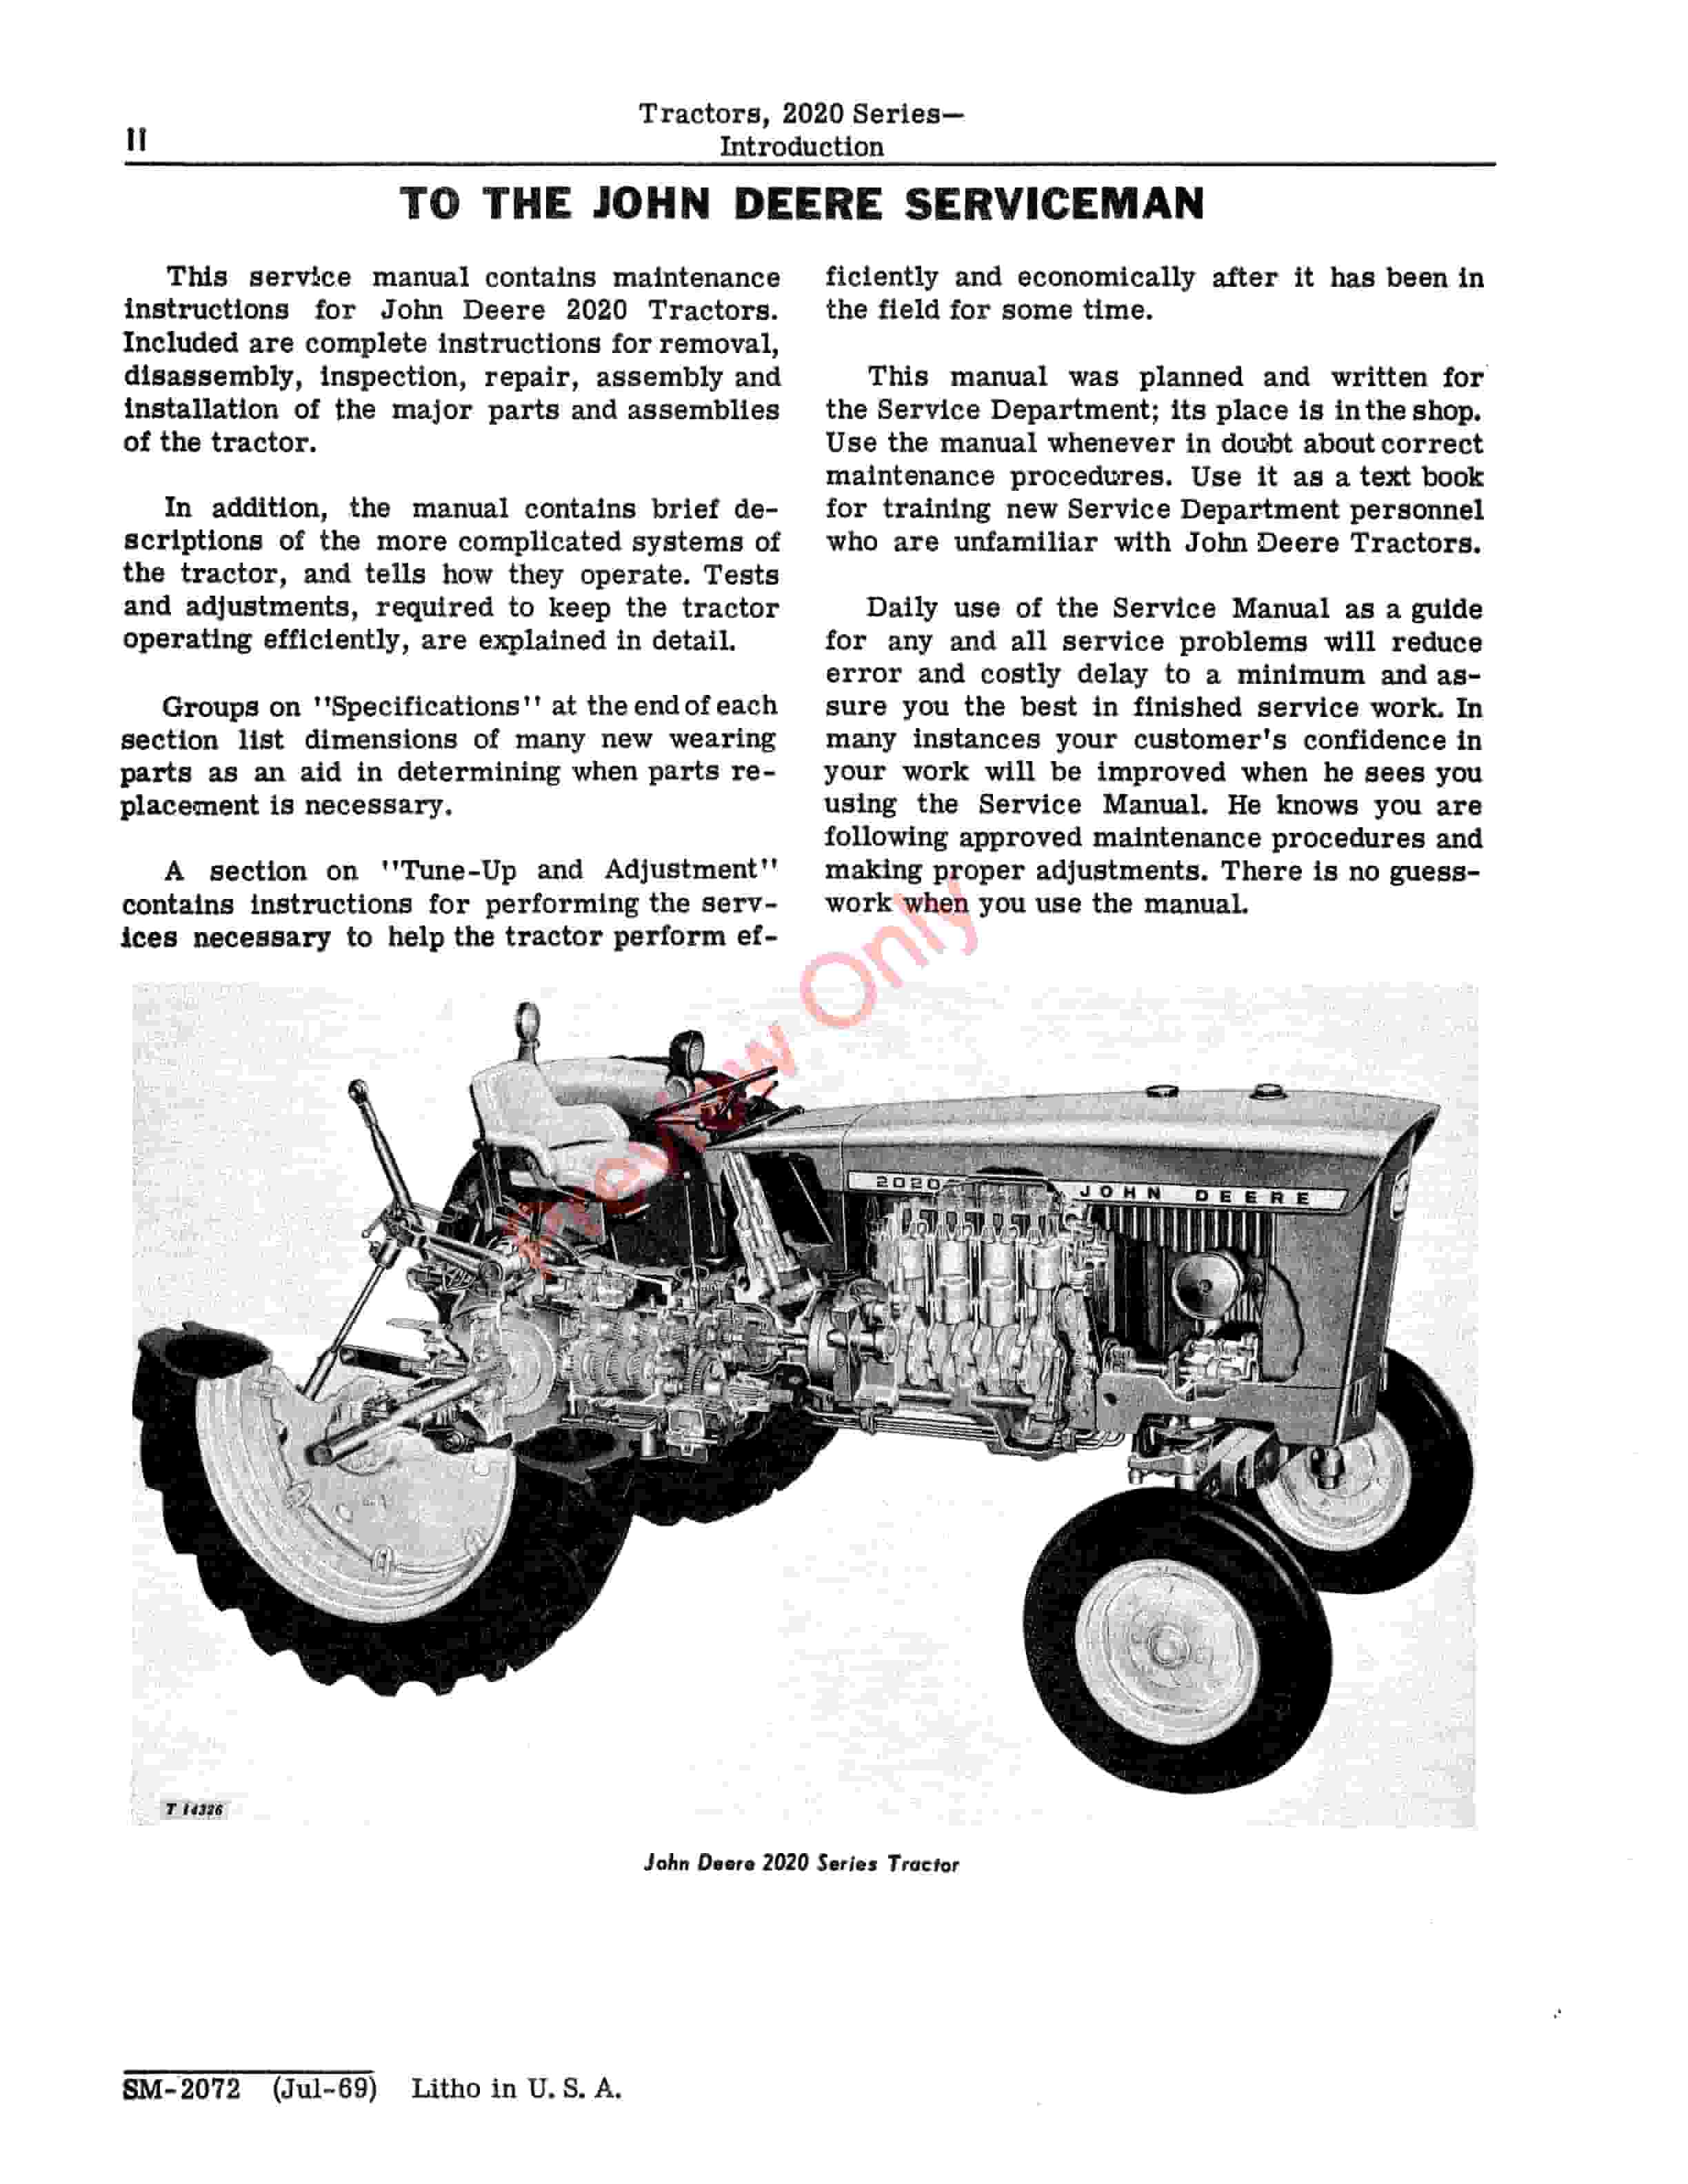 John Deere 2020 Series Tractors Service Manual SM2072 01JUL69 4